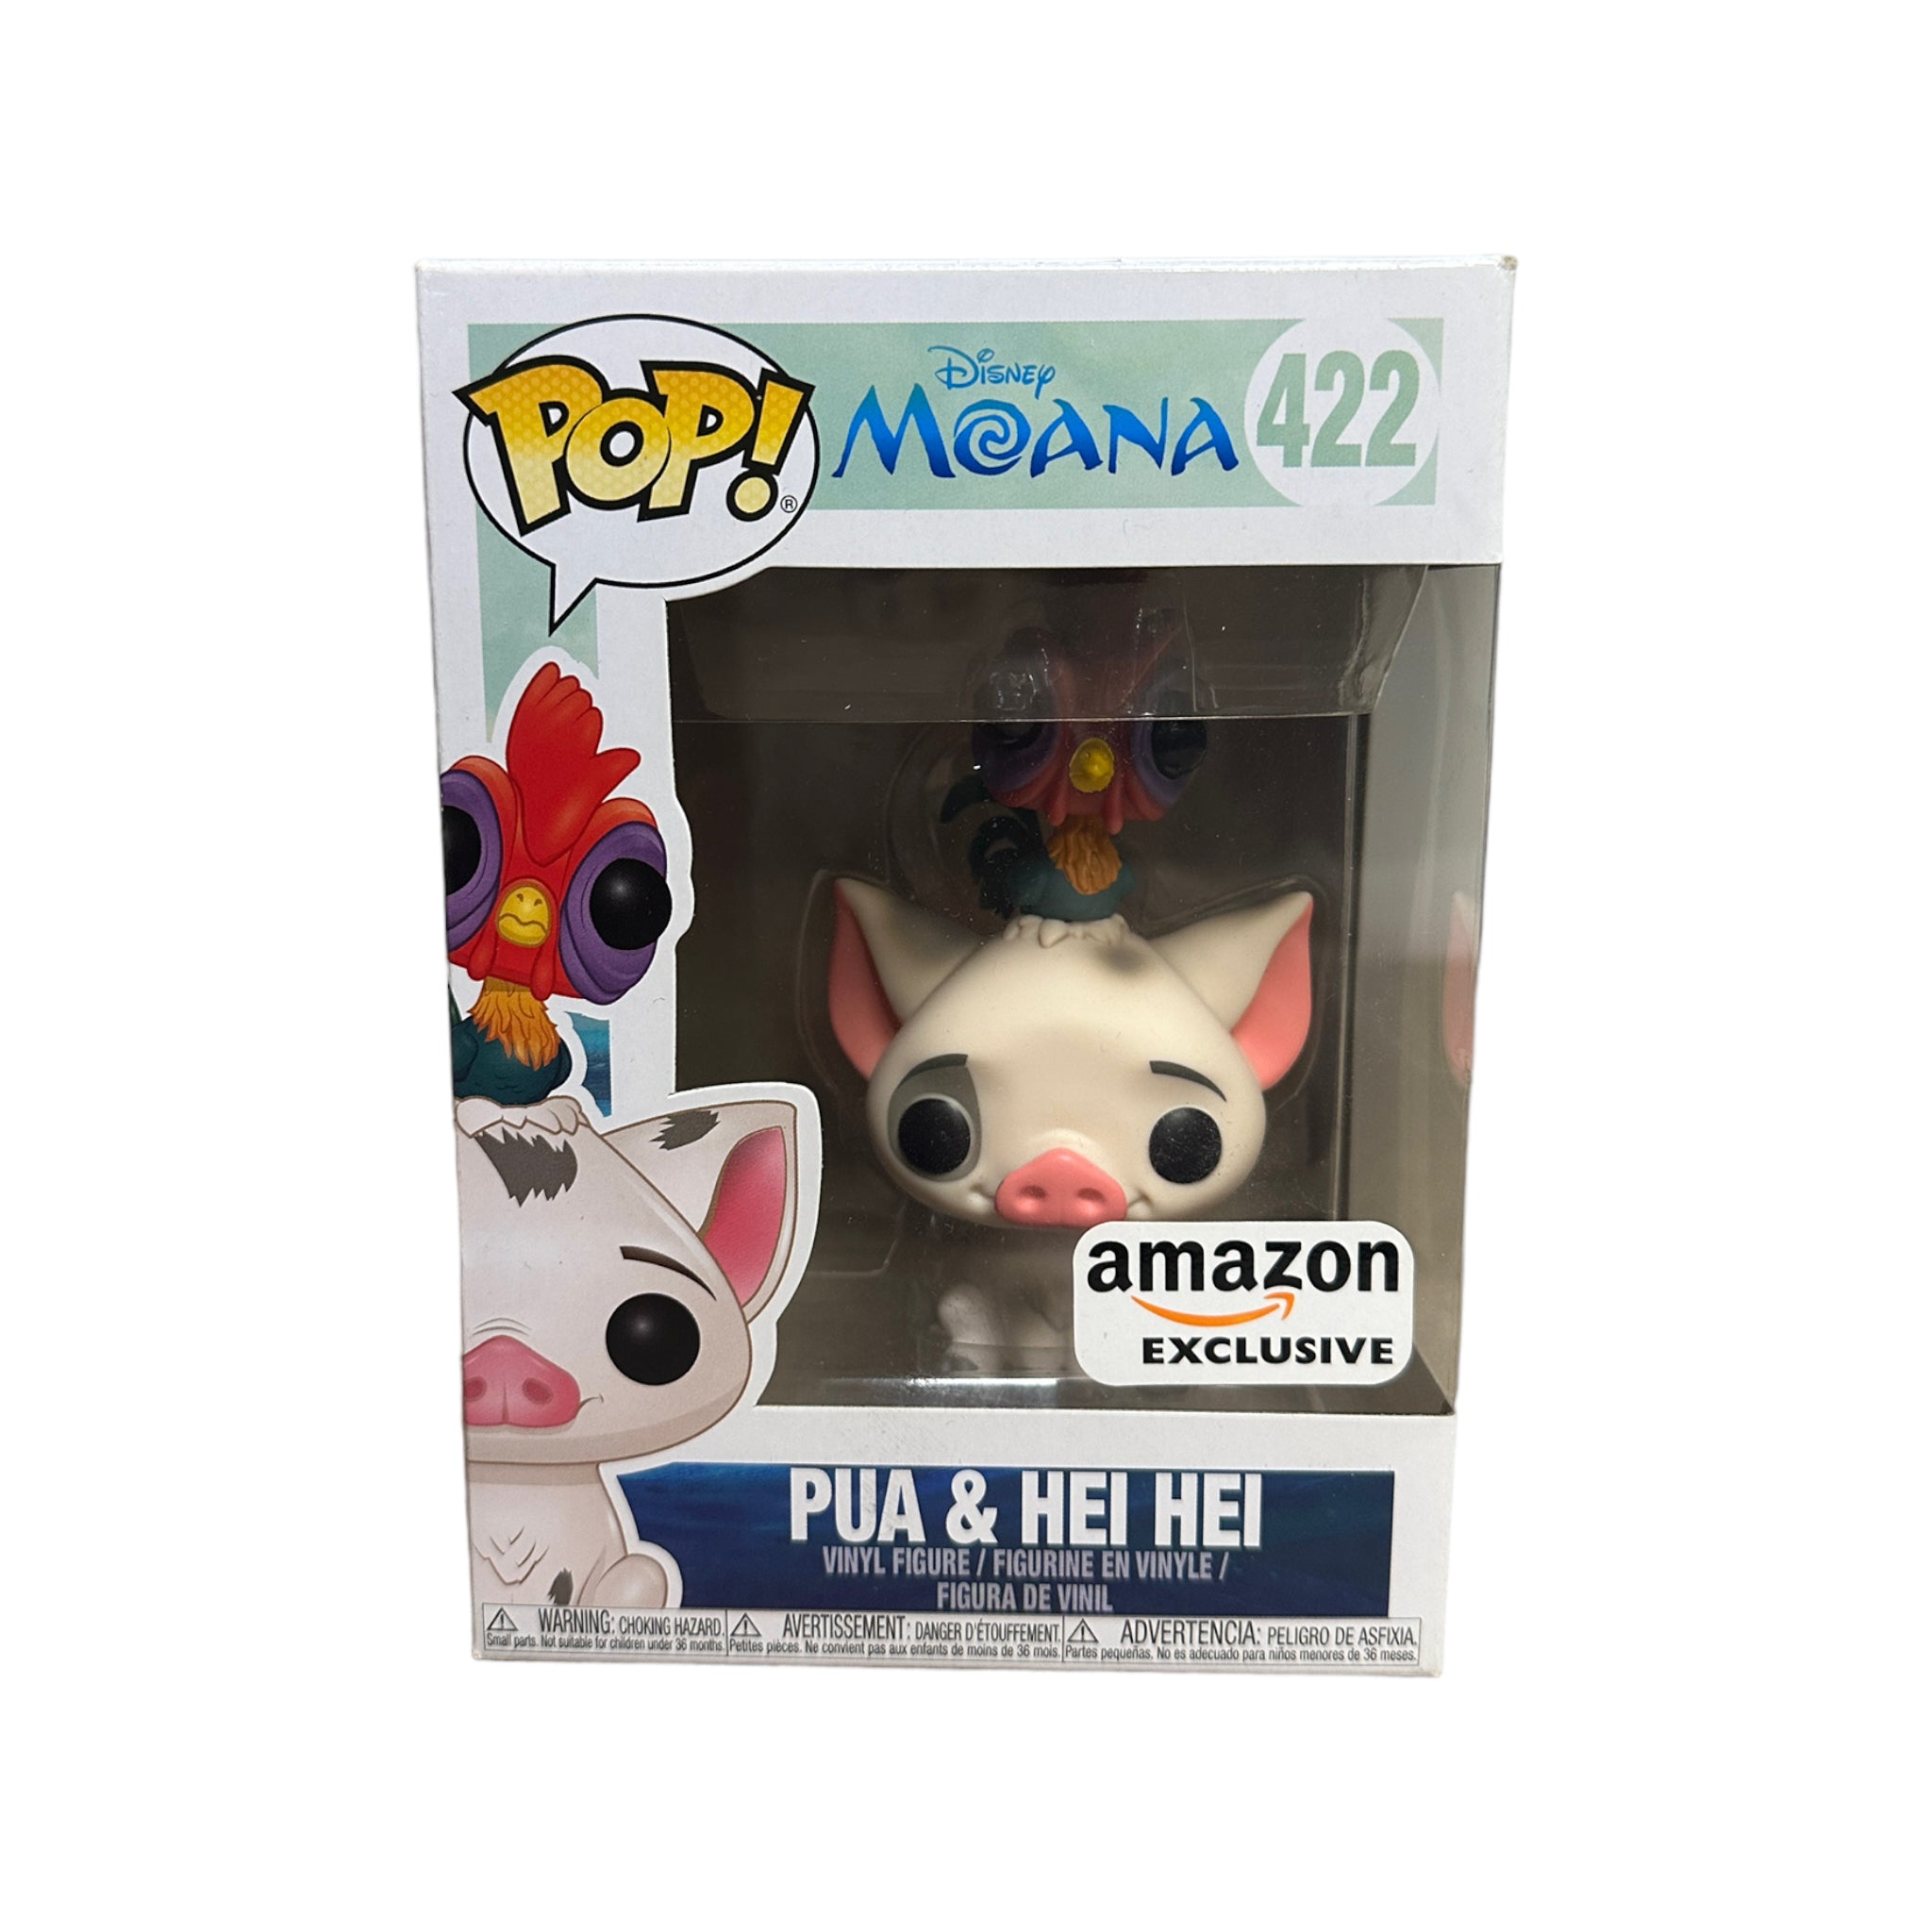 Pua & Hei Hei #422 Funko Pop! - Moana - Amazon Exclusive - Condition 7.5/10